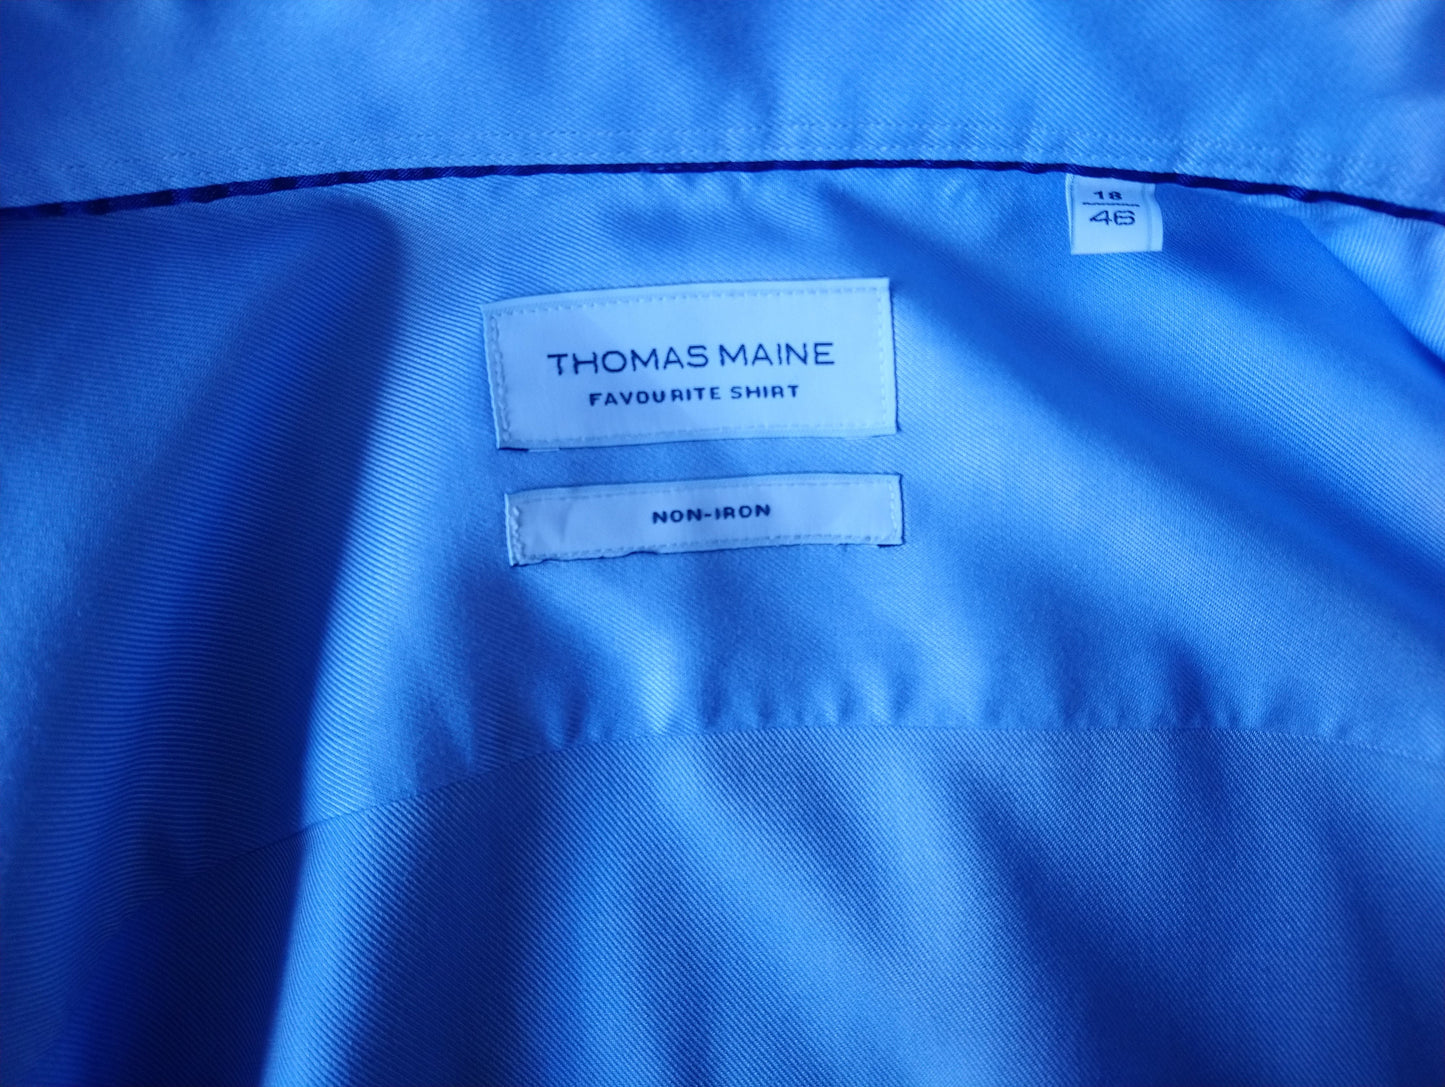 Chemise Thomas Maine. Couleur bleu clair. Taille 46 / xxl / 2xl.